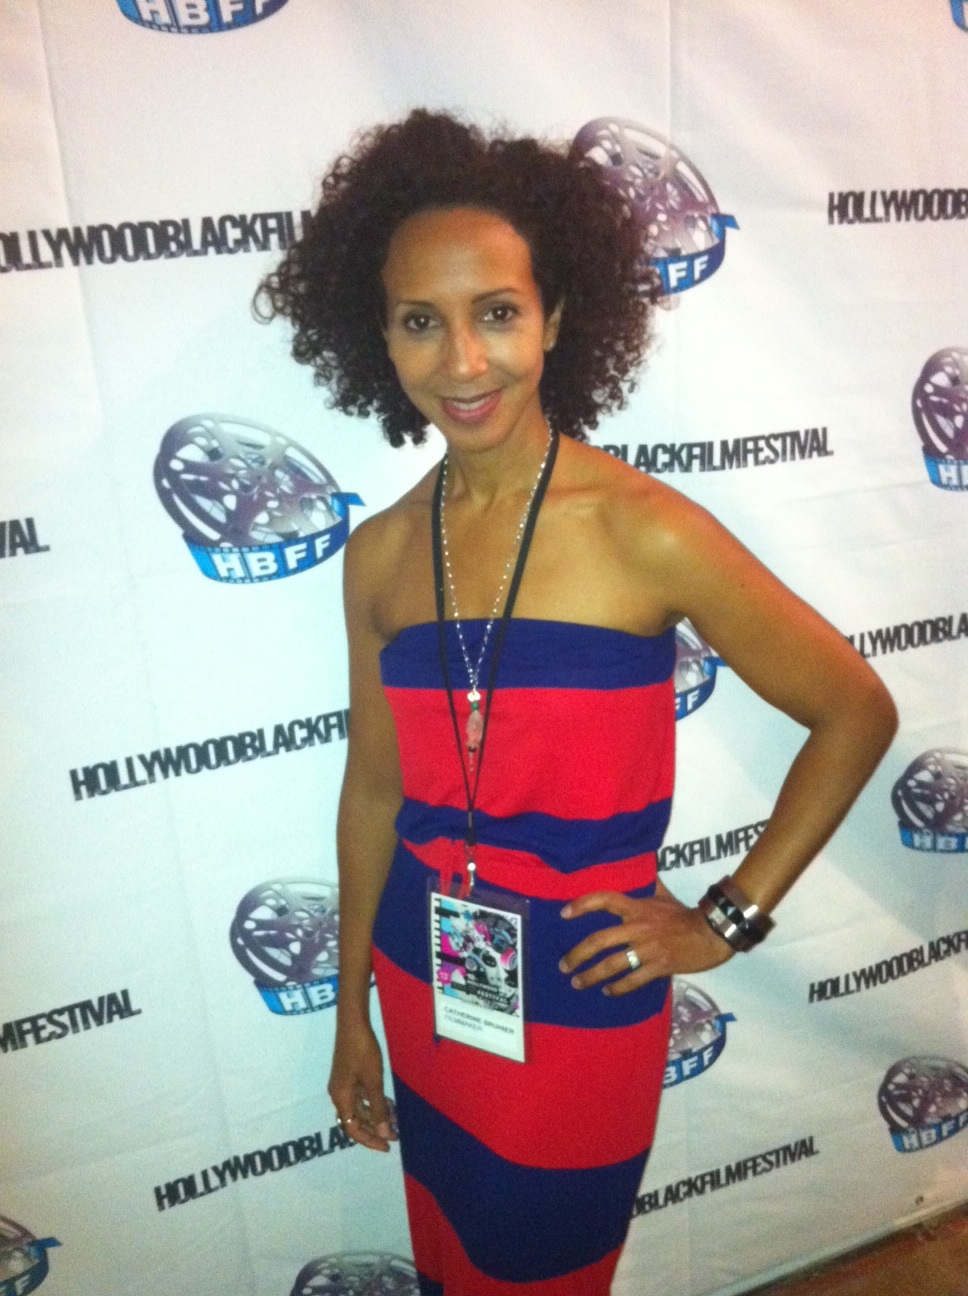 2013 Hollywood Black Film Festival 'Clean Teeth Wednesdays' Screening at The Ricardo Montalban Theater Hollywood